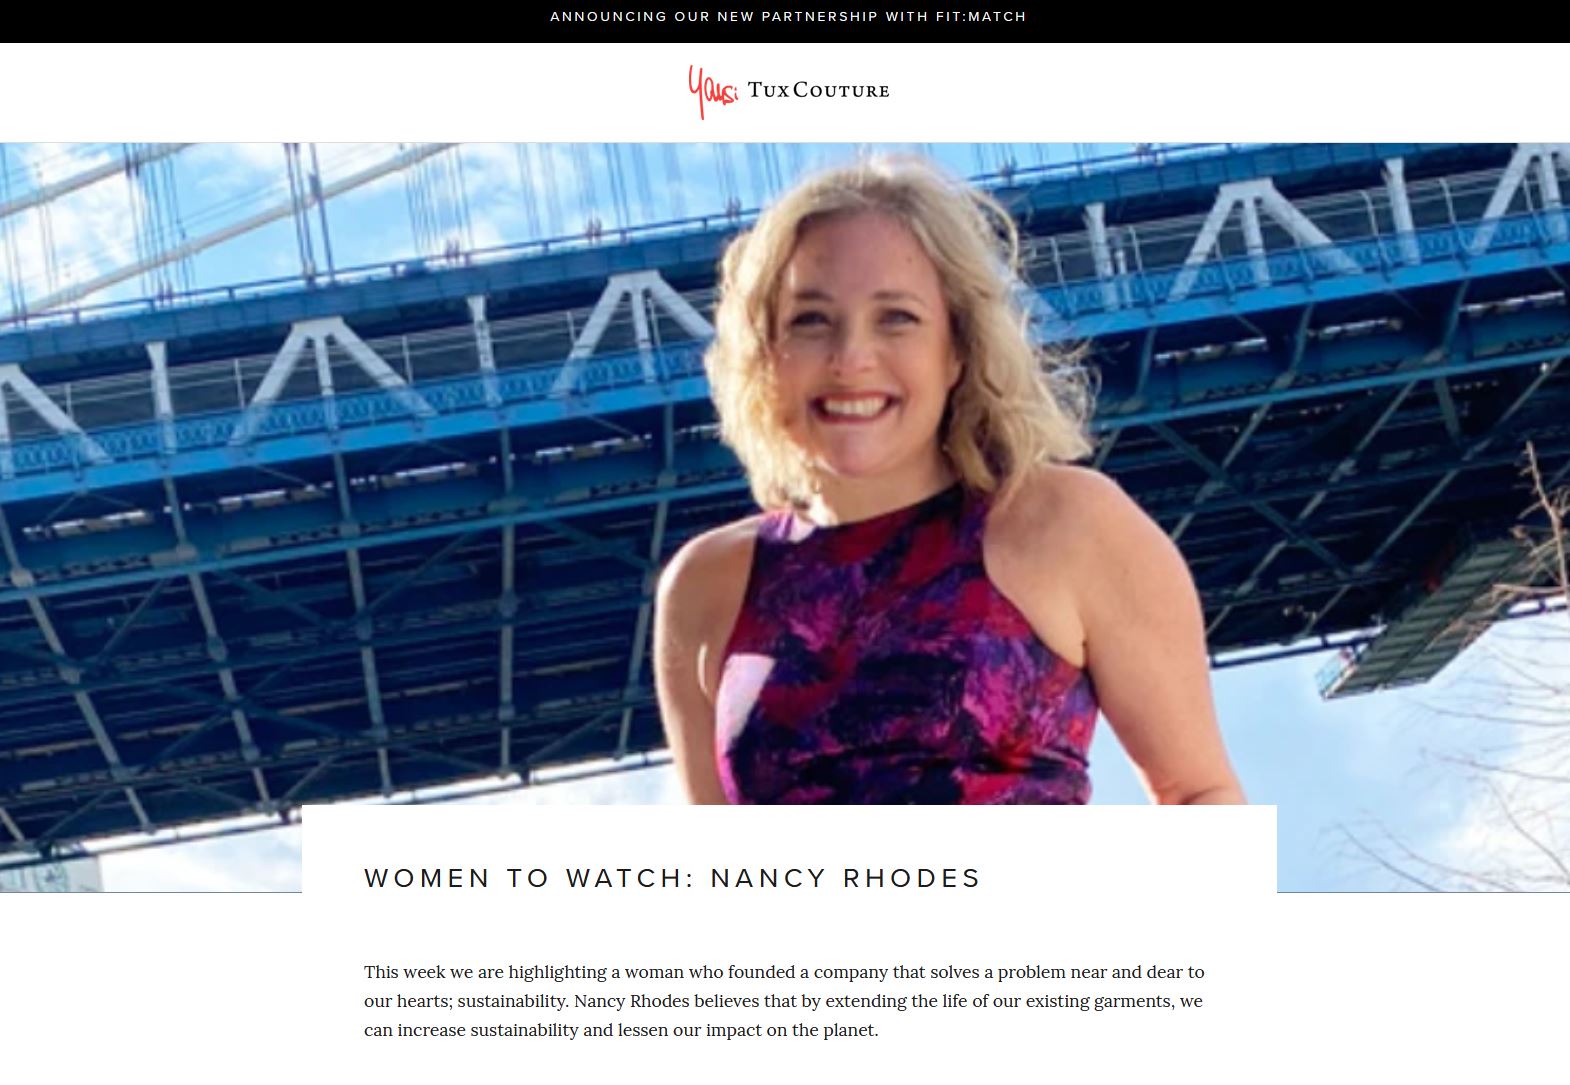 Women to Watch: Nancy Rhodes